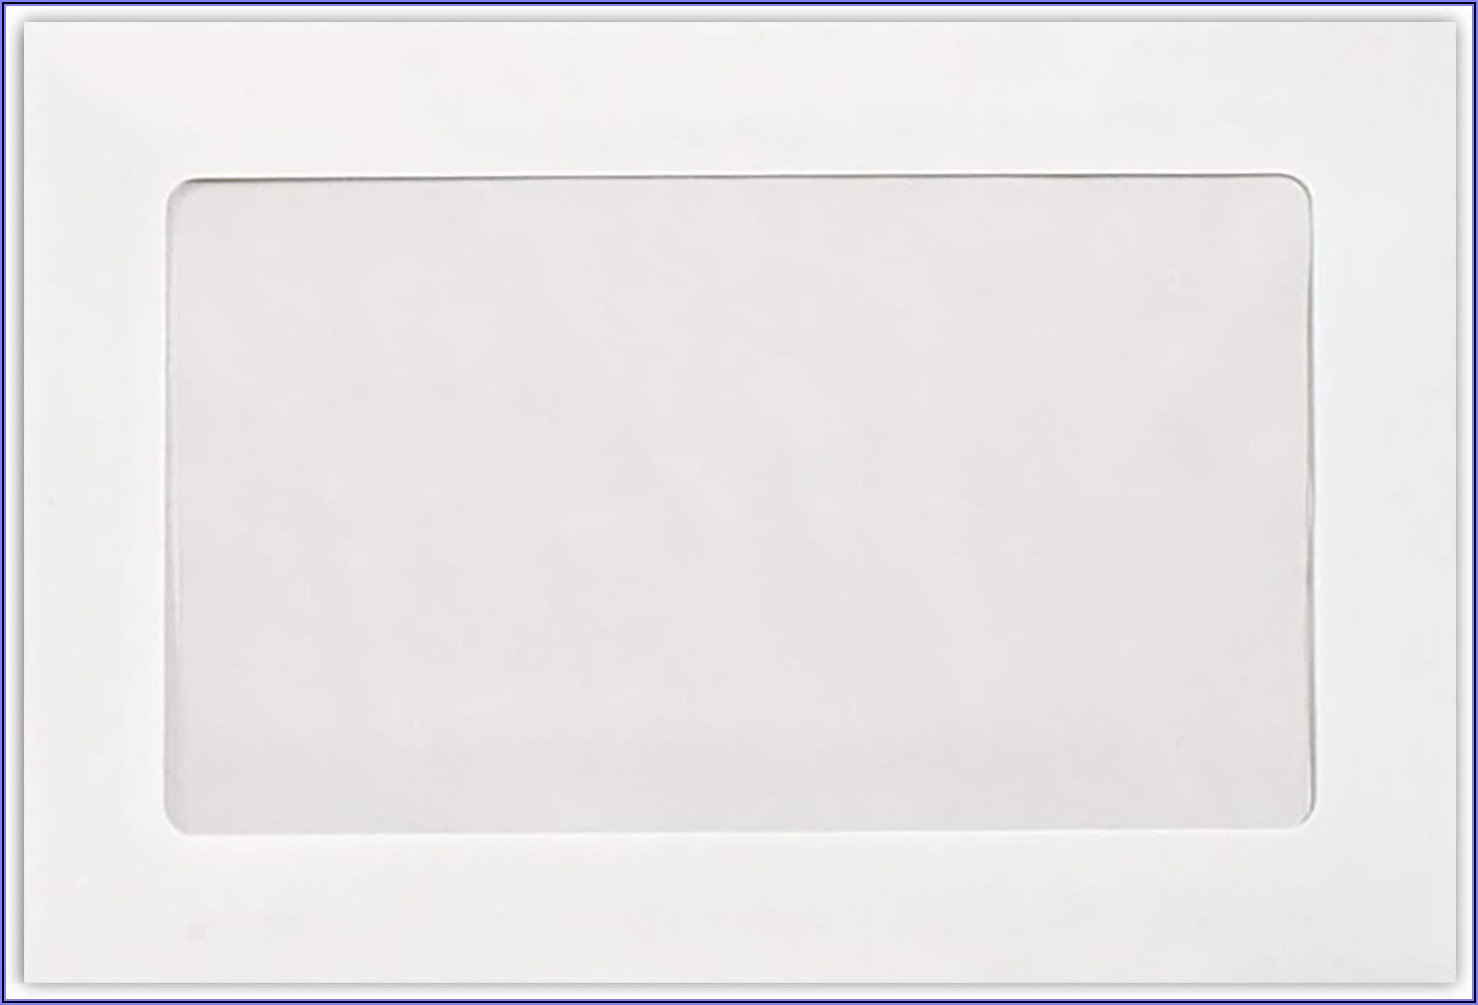 9x12 Booklet Window Envelope Template